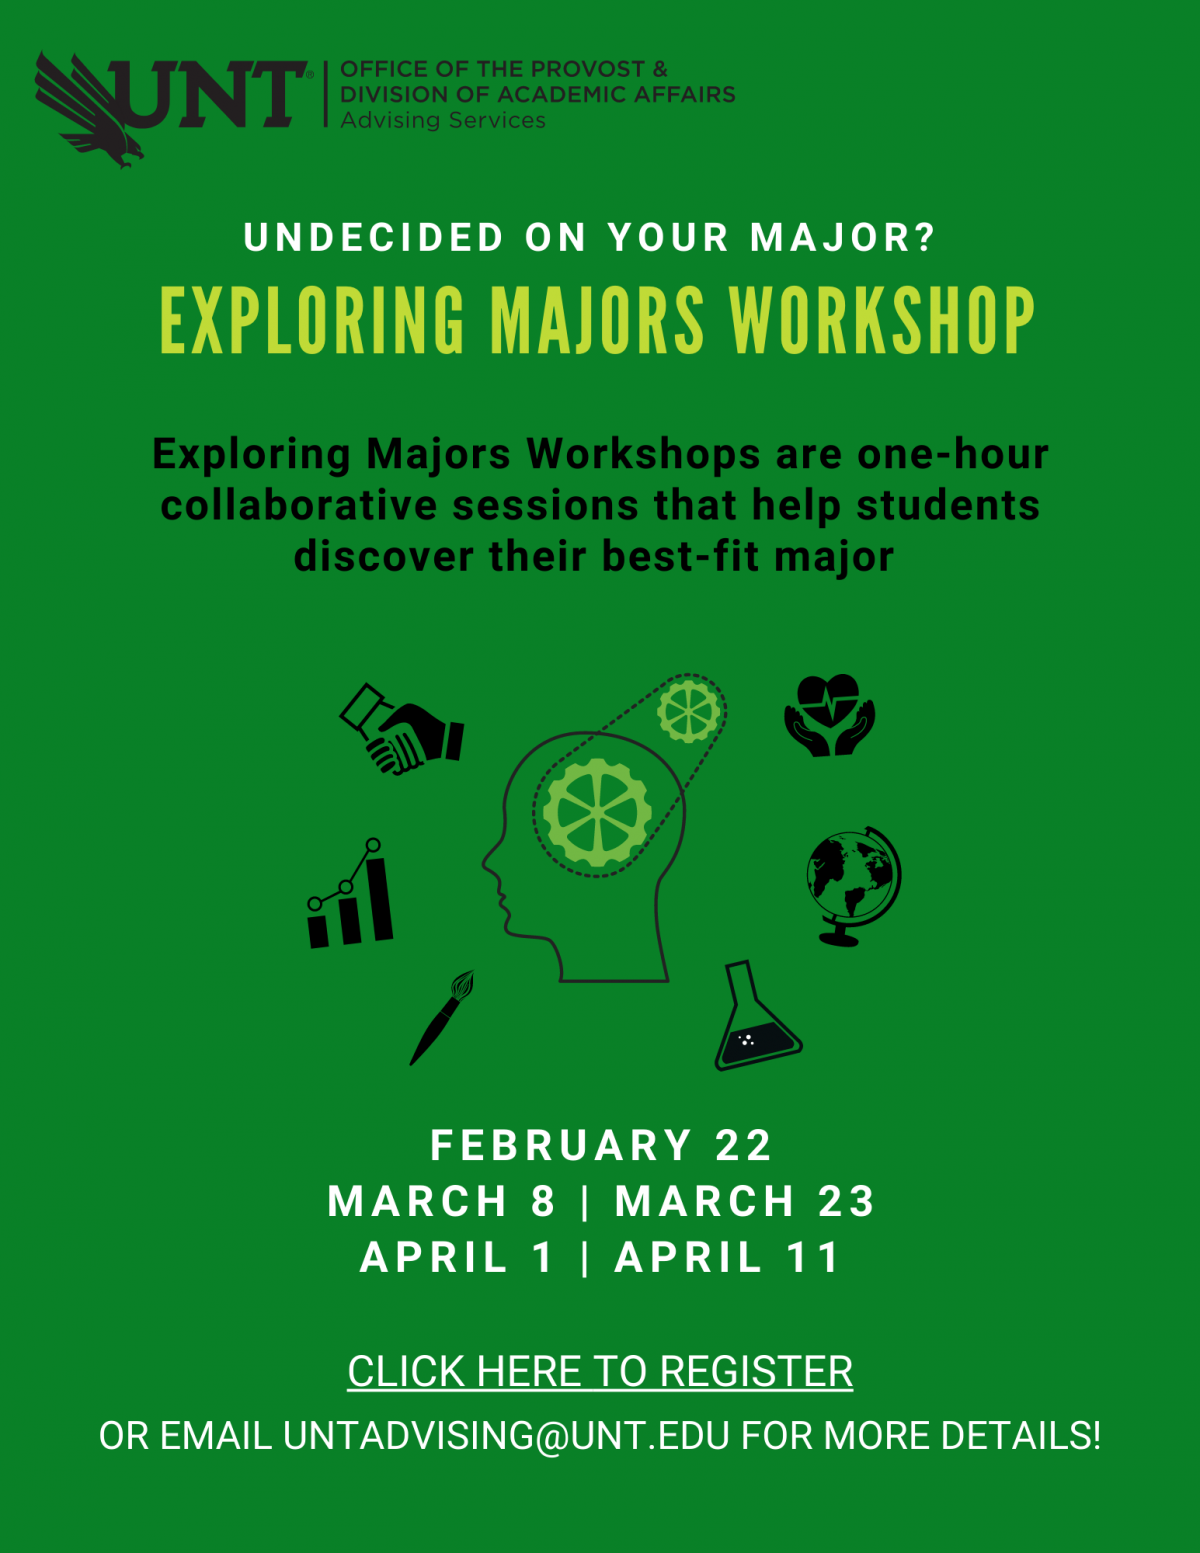  Schedule your exploring majors workshop date via Navigate